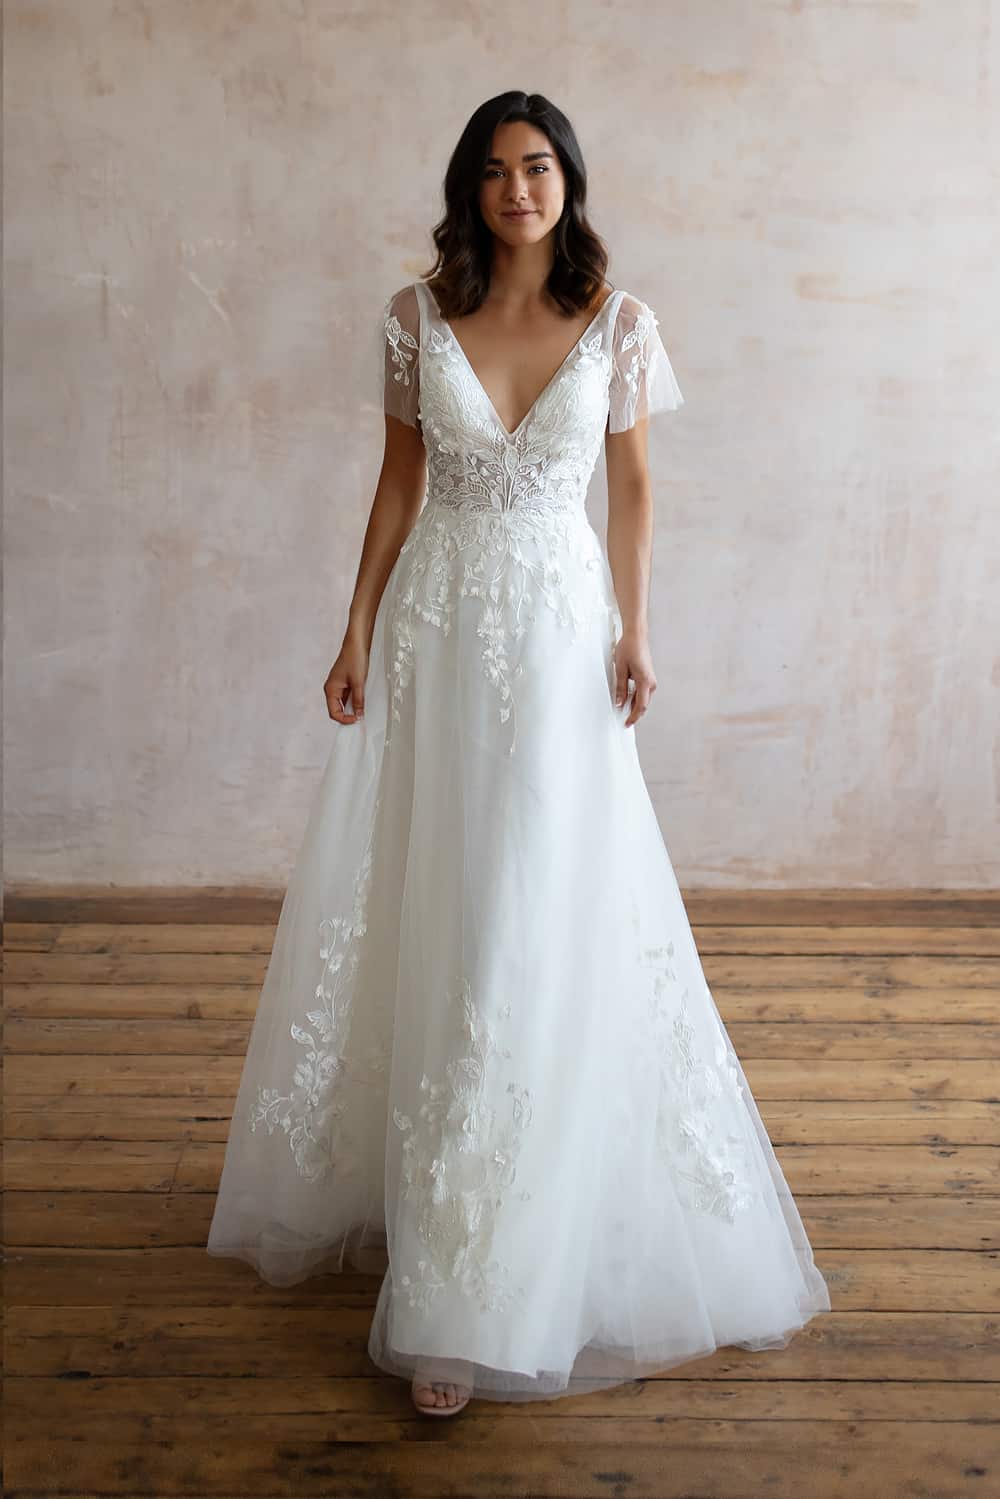 51 Beach Wedding Dresses Perfect For Destination Weddings | Wedding dresses  romantic, Wedding dresses vintage, Wedding dresses lace